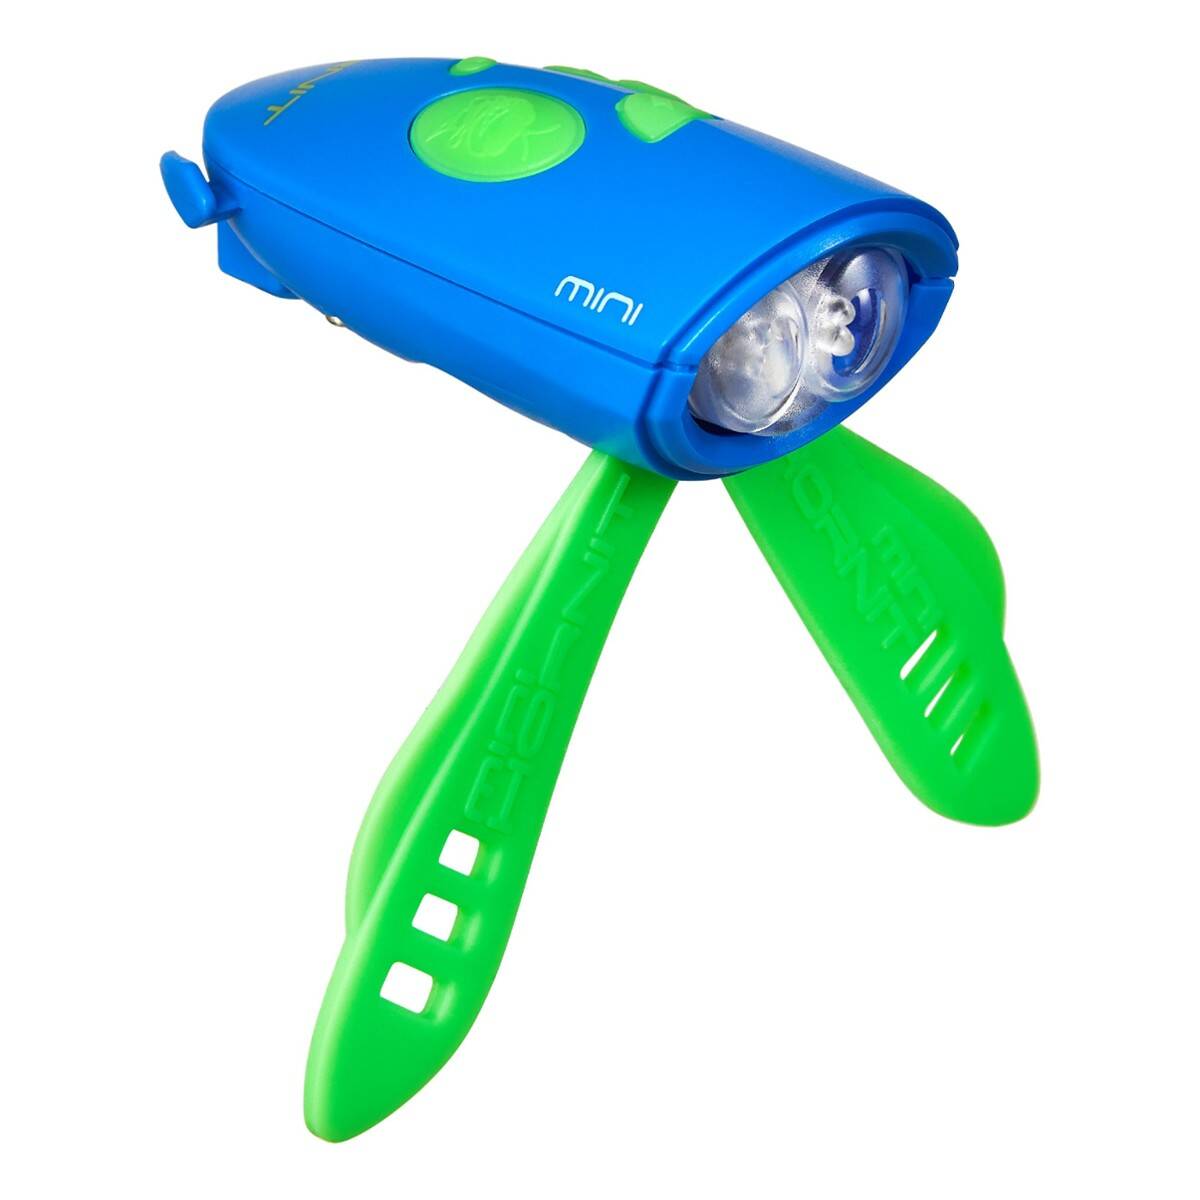 Mini HORNIT lampka klakson GREEN - BLUE (Zdjęcie 1)